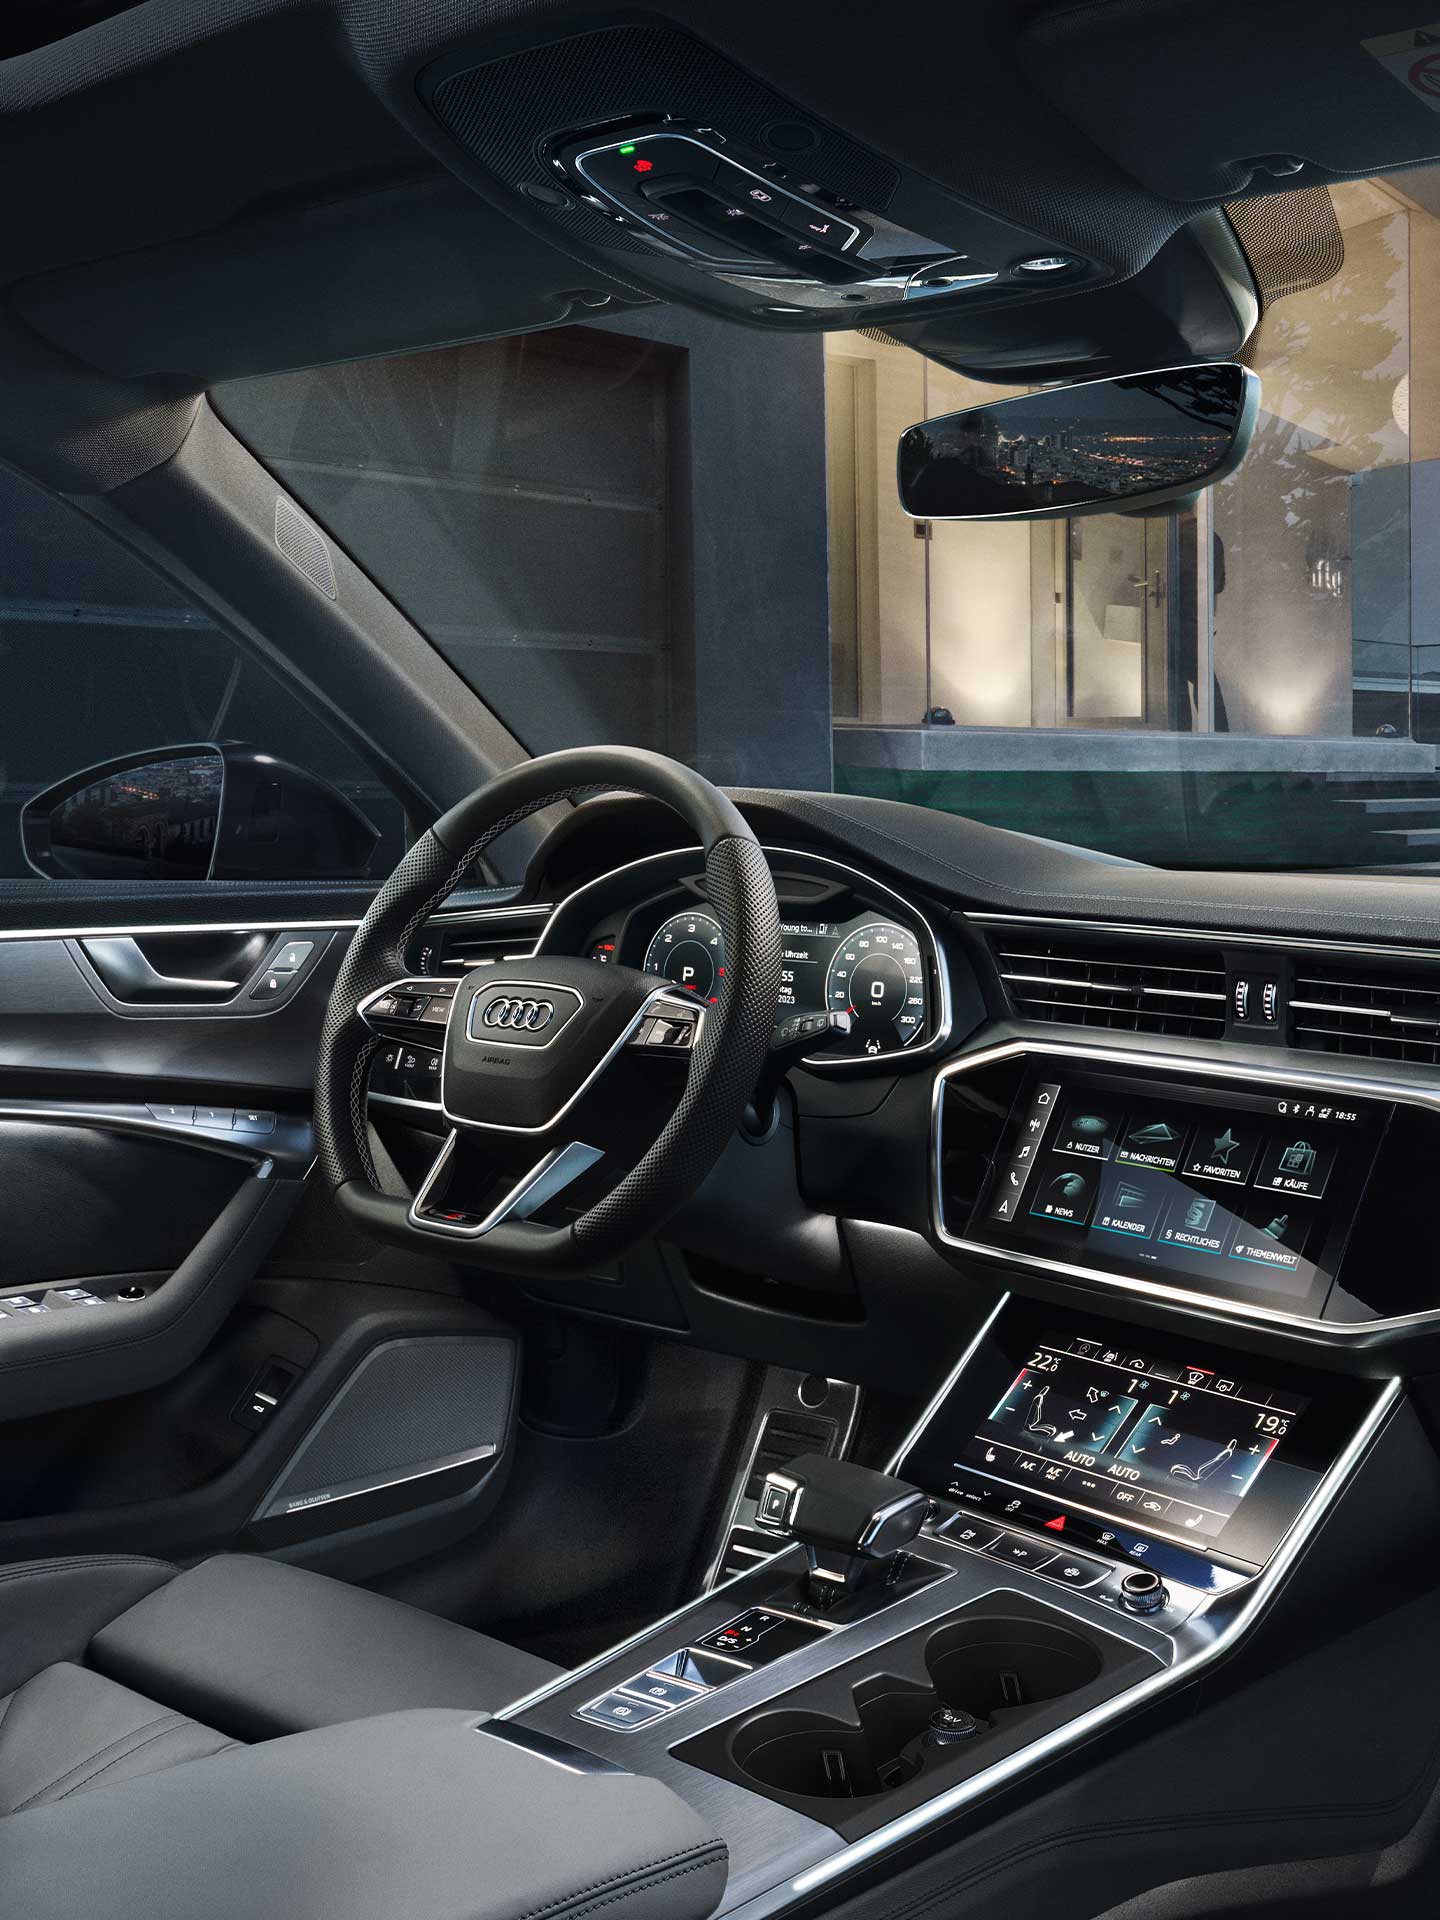 Licht thema Audi cockpit